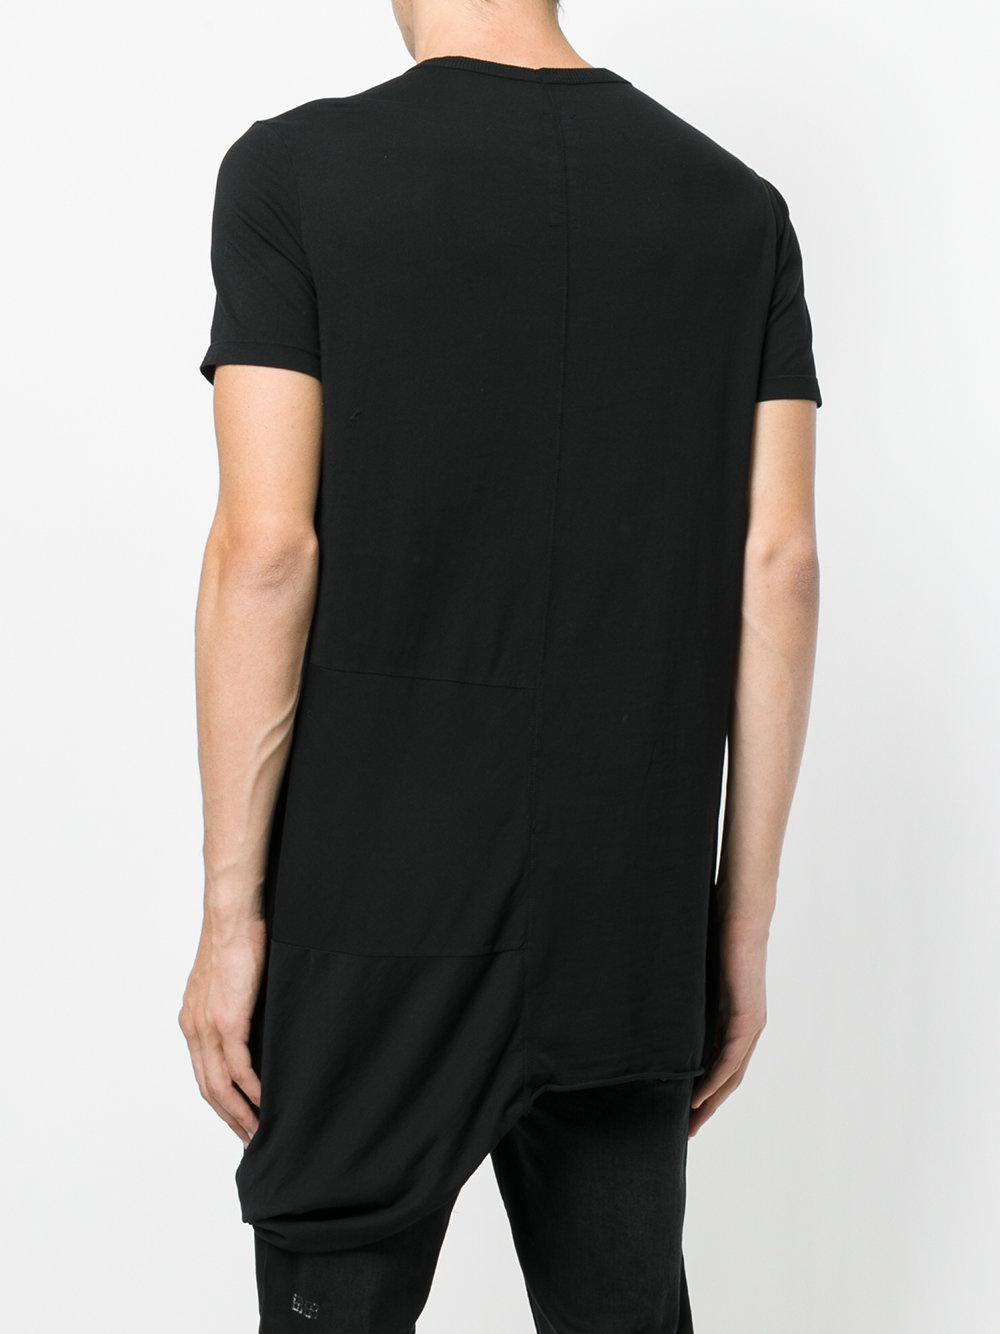 Lyst - Rick Owens Drkshdw Asymmetric Cut T-shirt in Black for Men